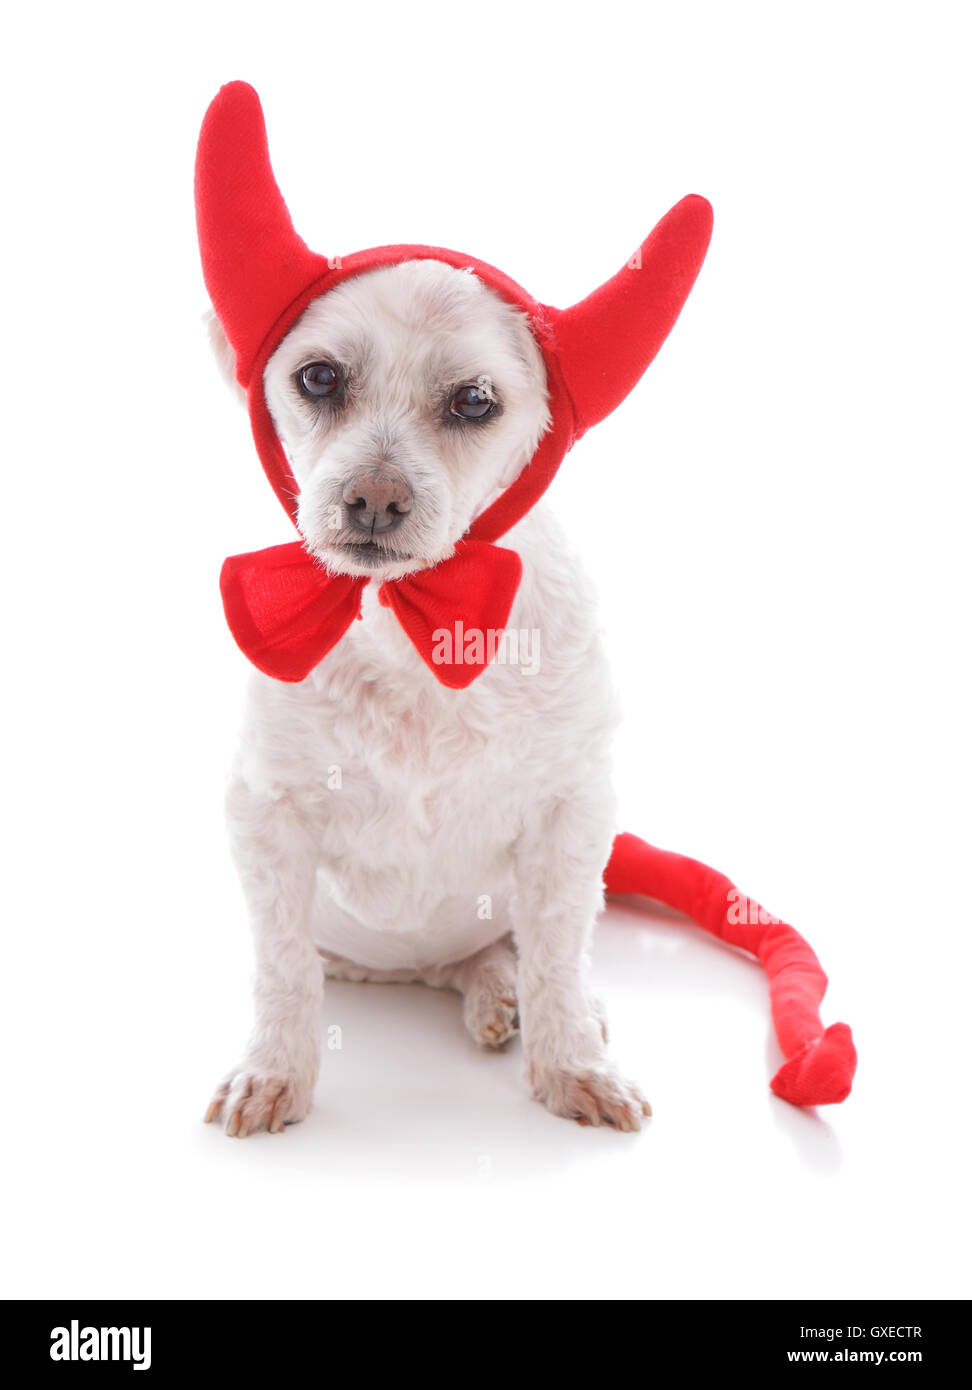 Bad Dog halloween devil costume Stock Photo